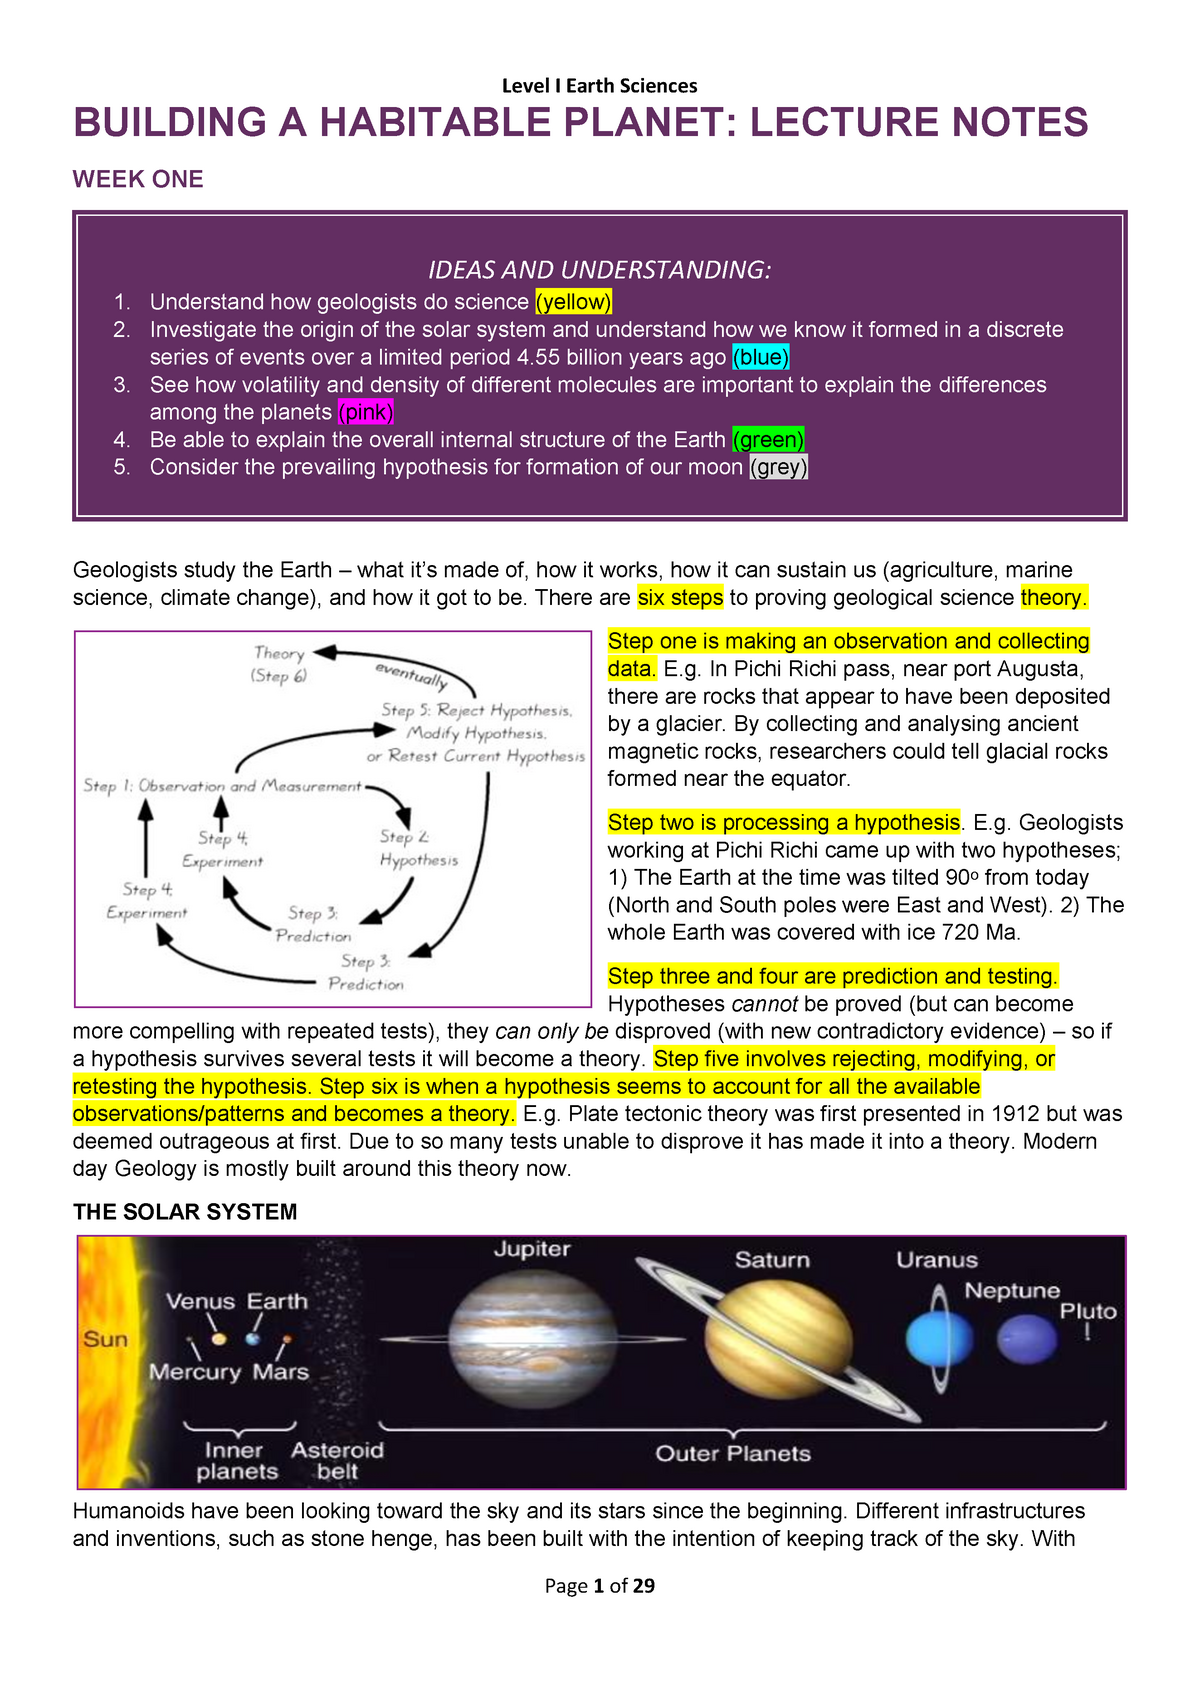 the six steps to solar nebula theory